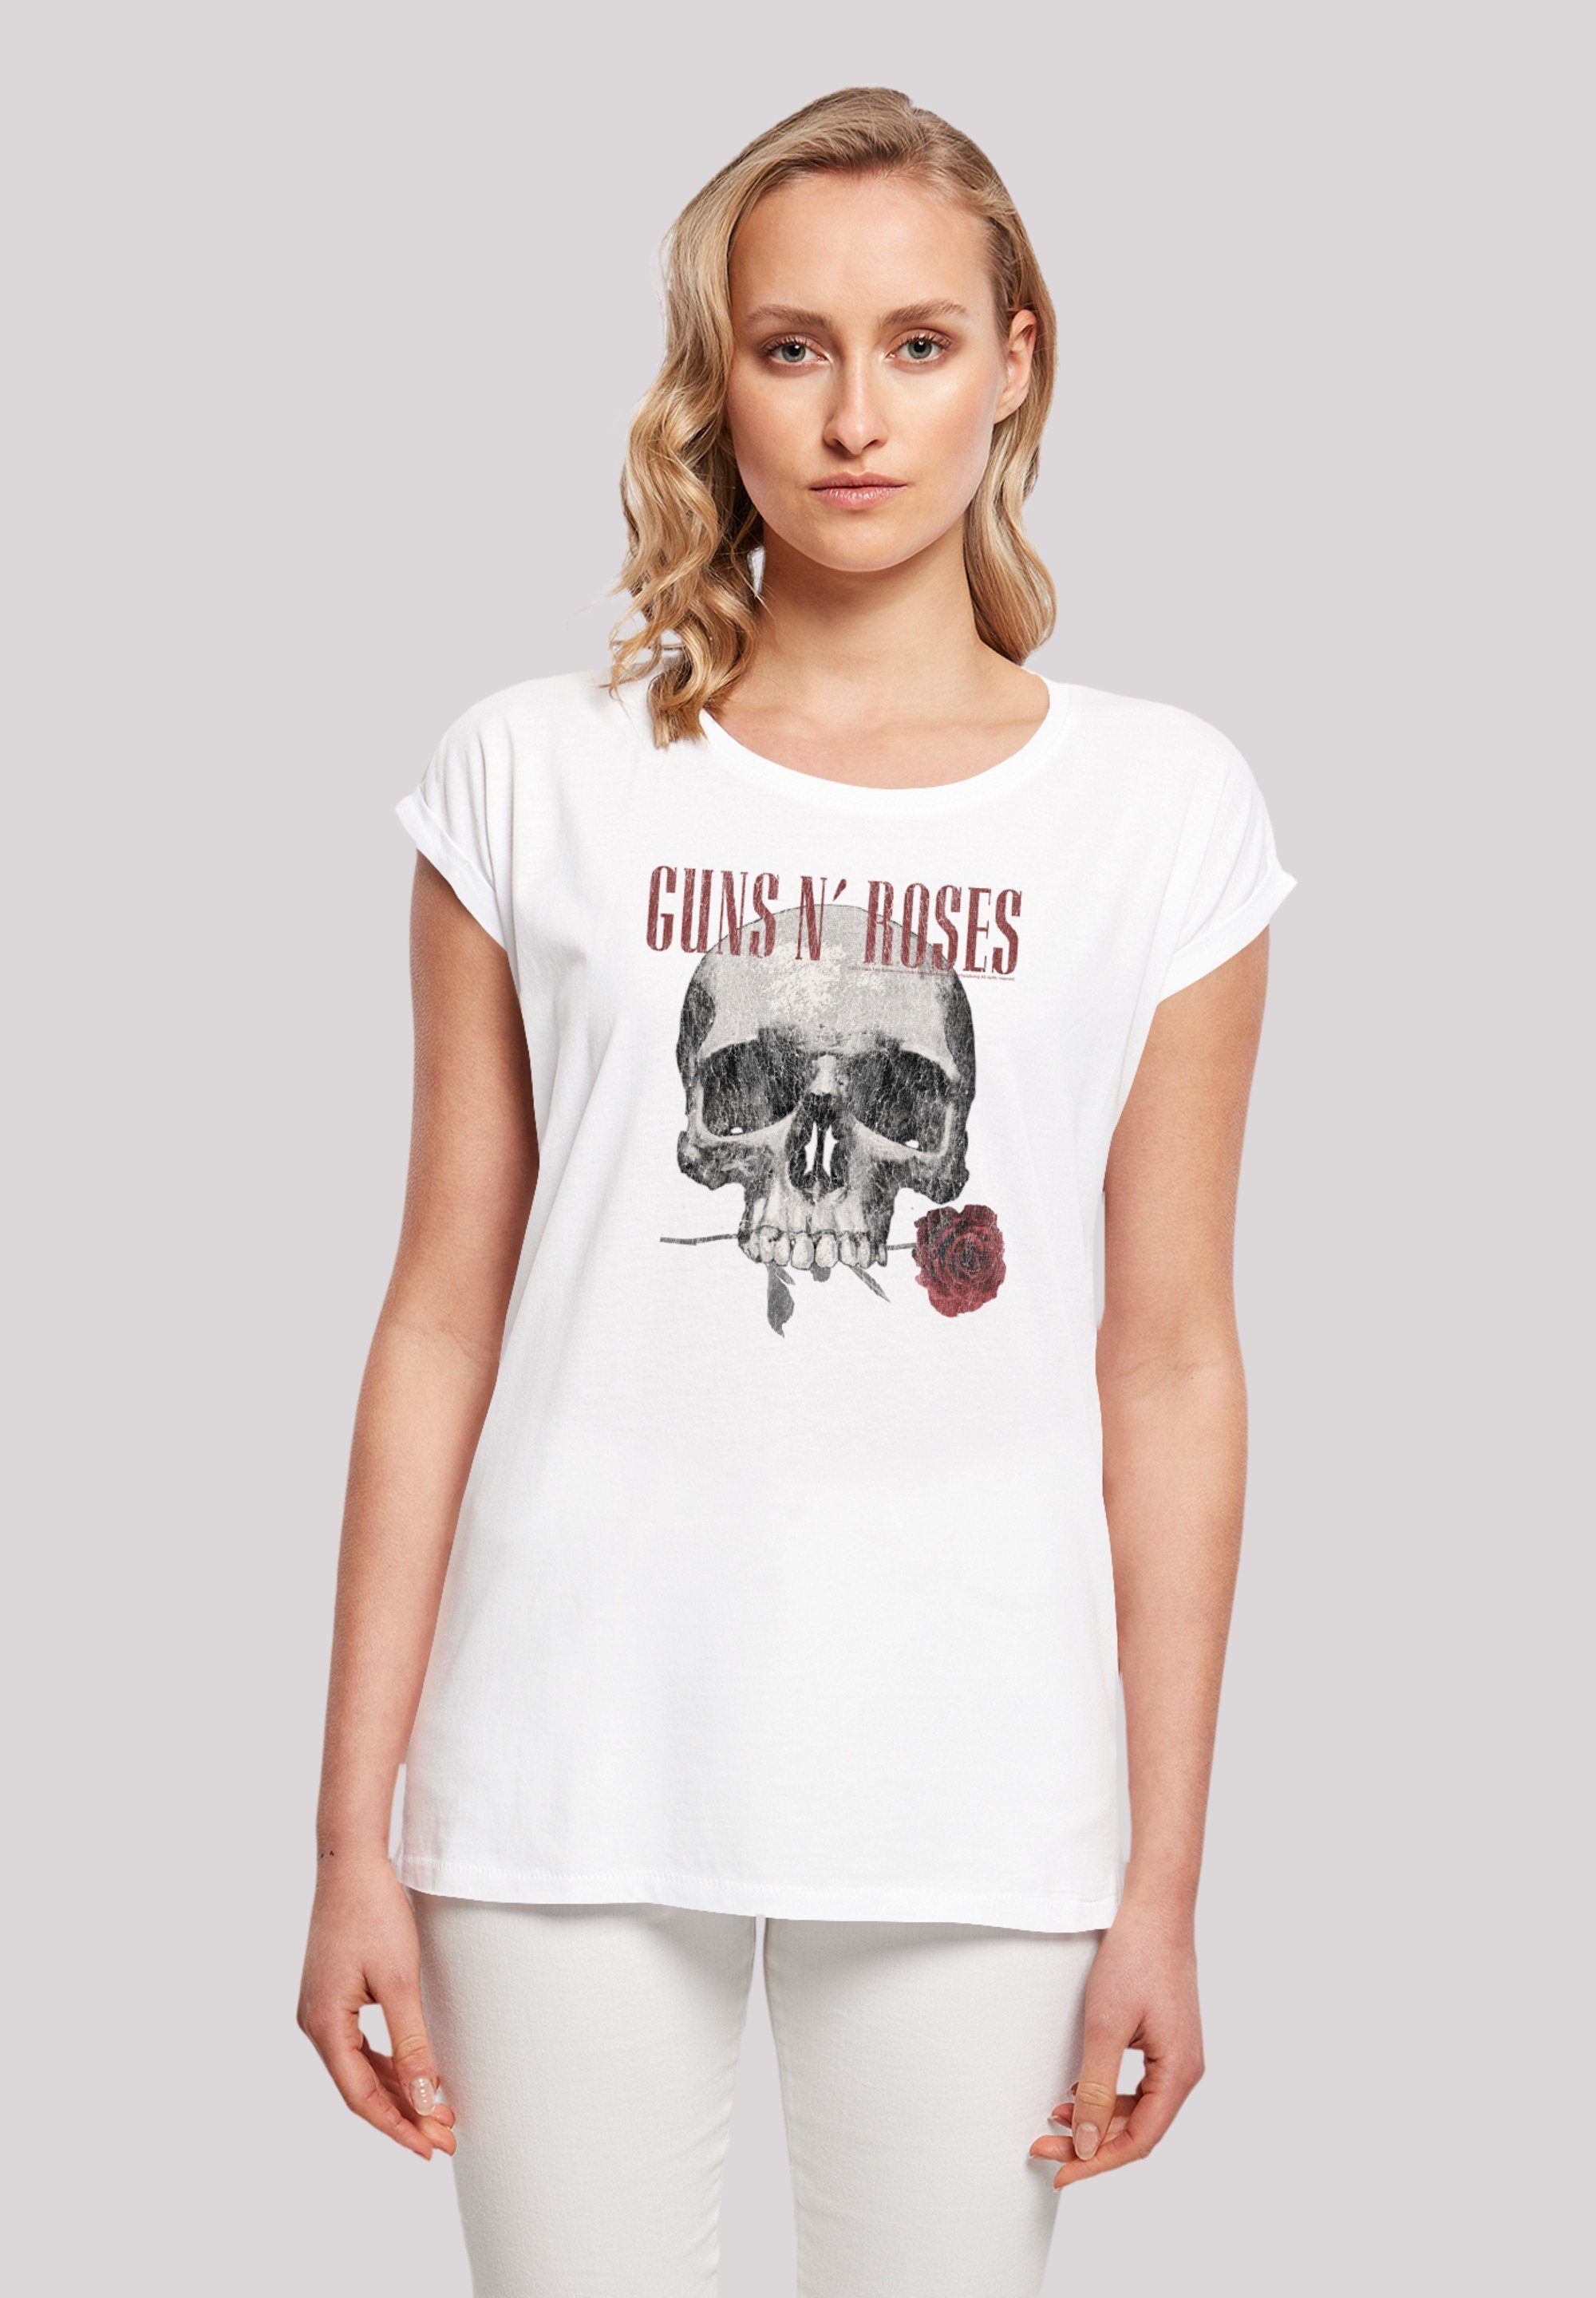 F4NT4STIC T-Shirt Guns 'n' Roses Flower Skull Rock Musik Band Premium Qualität weiß